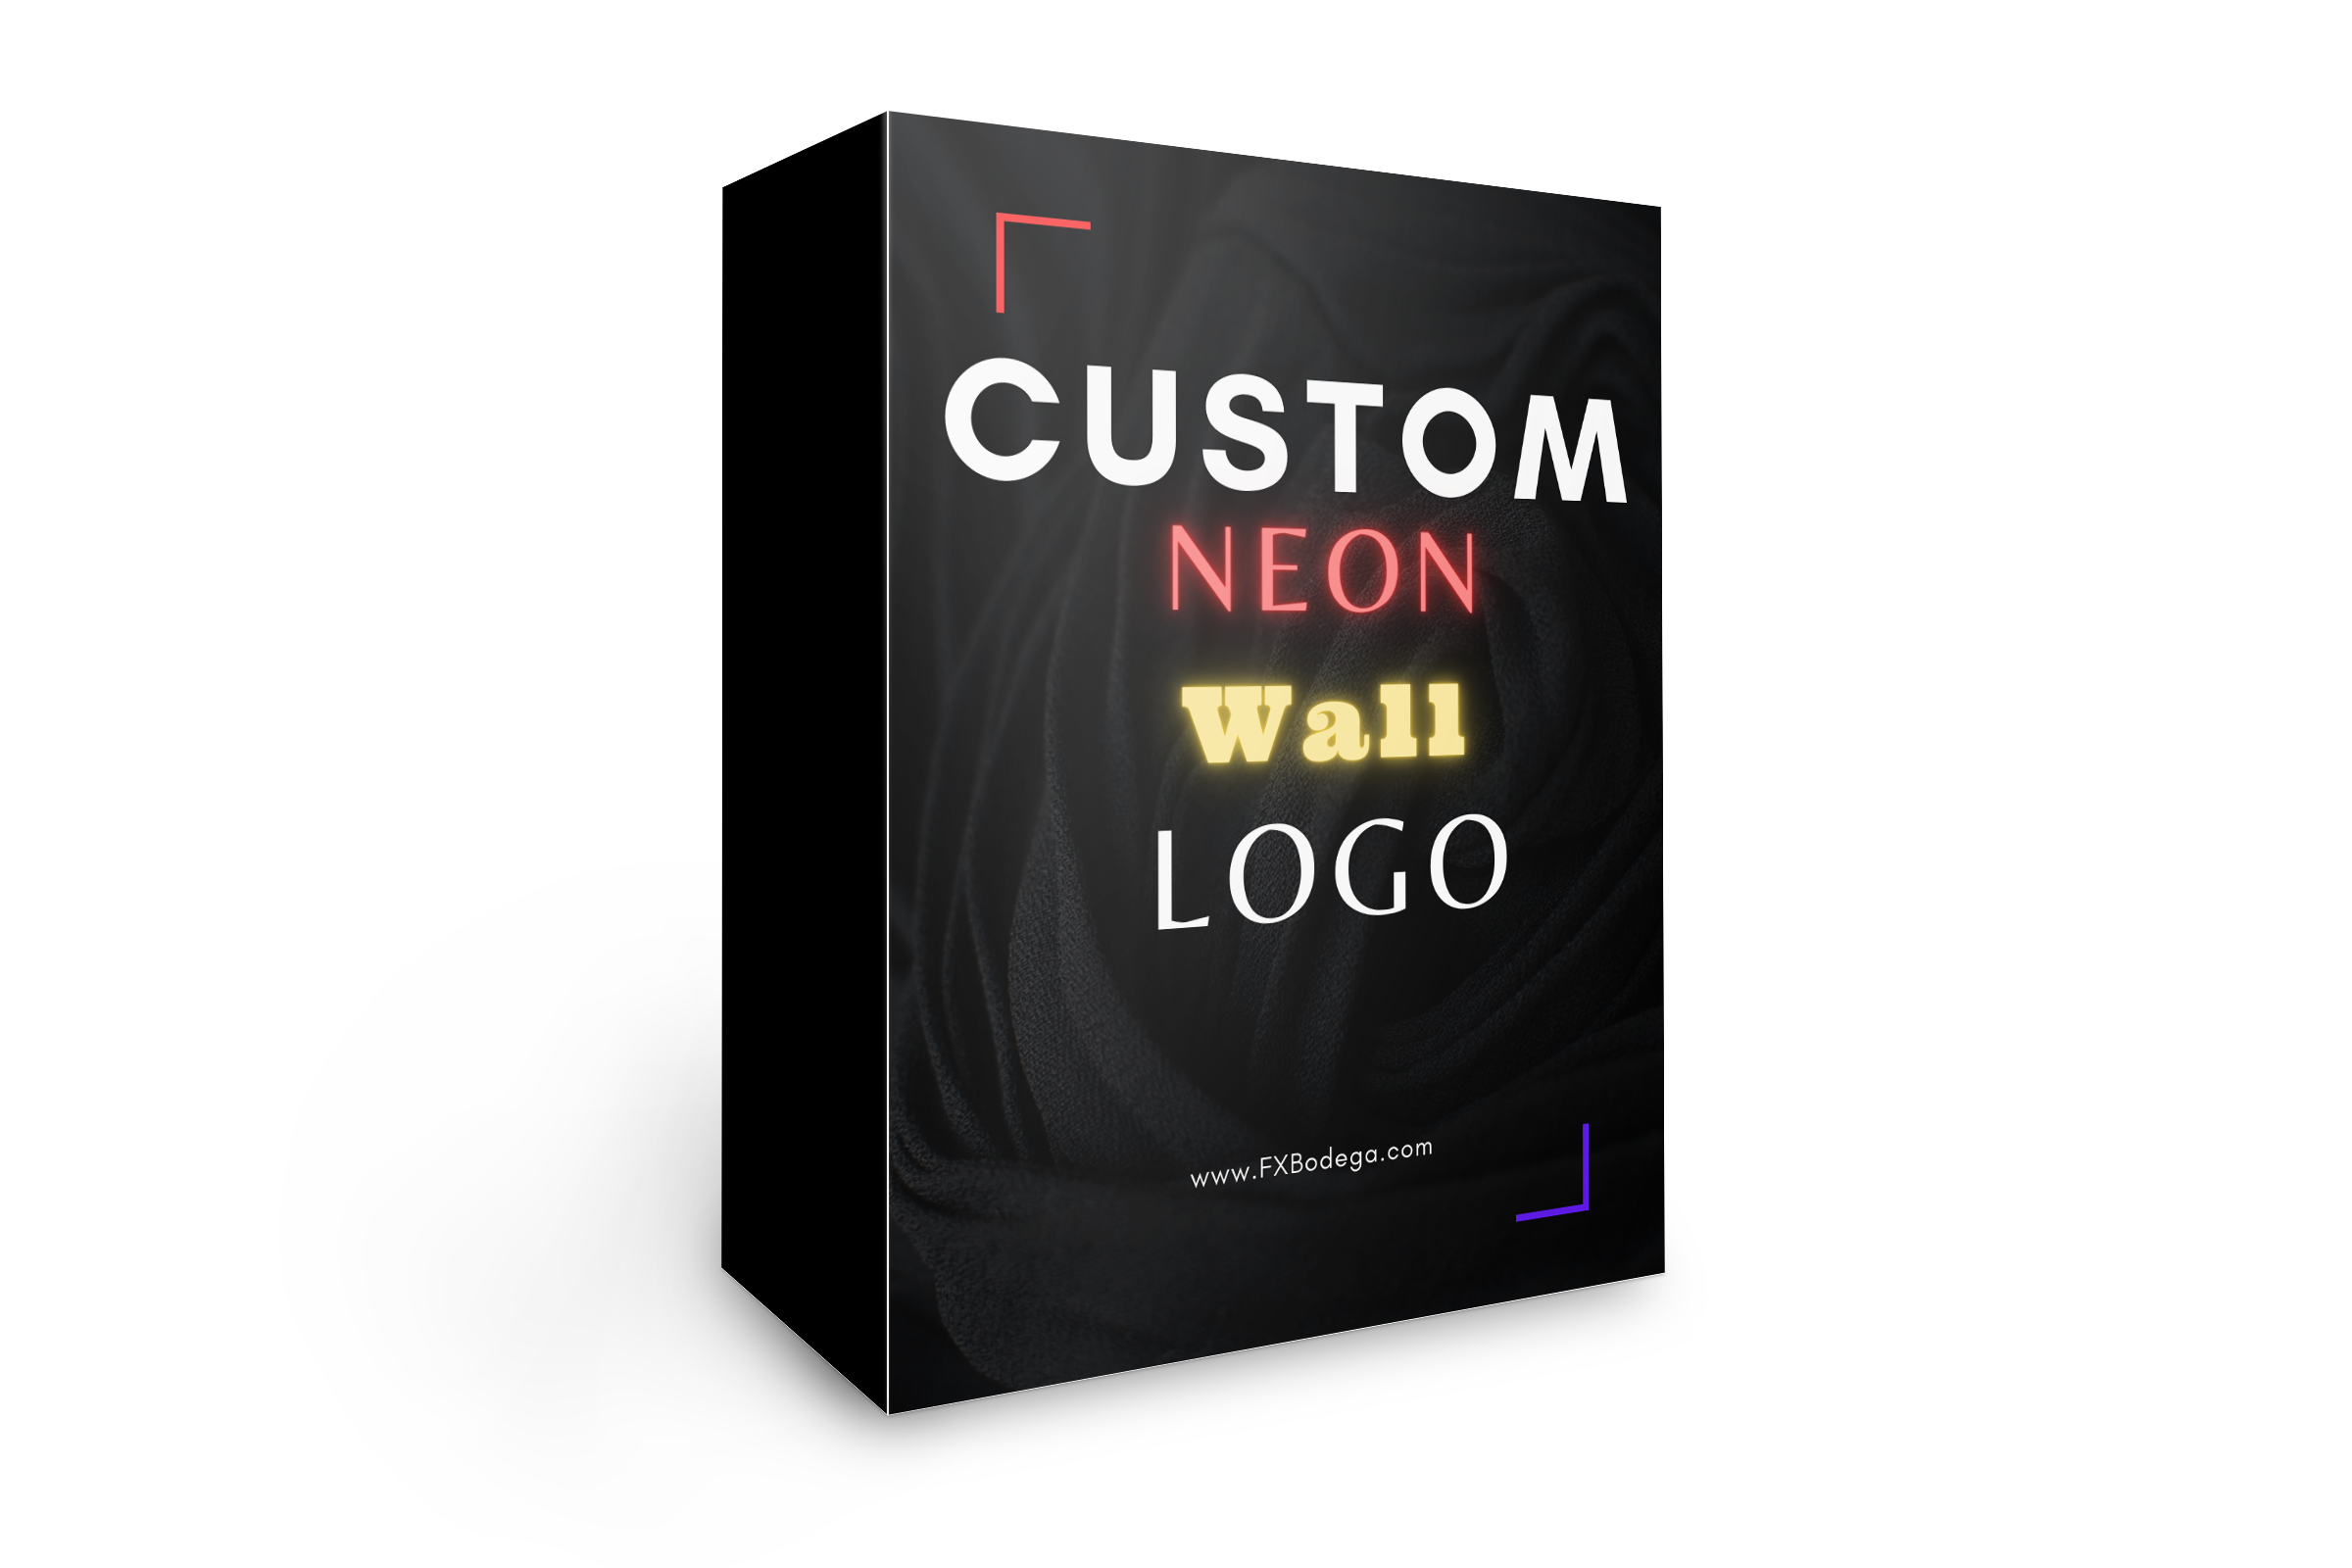 Custom Neon wall logo